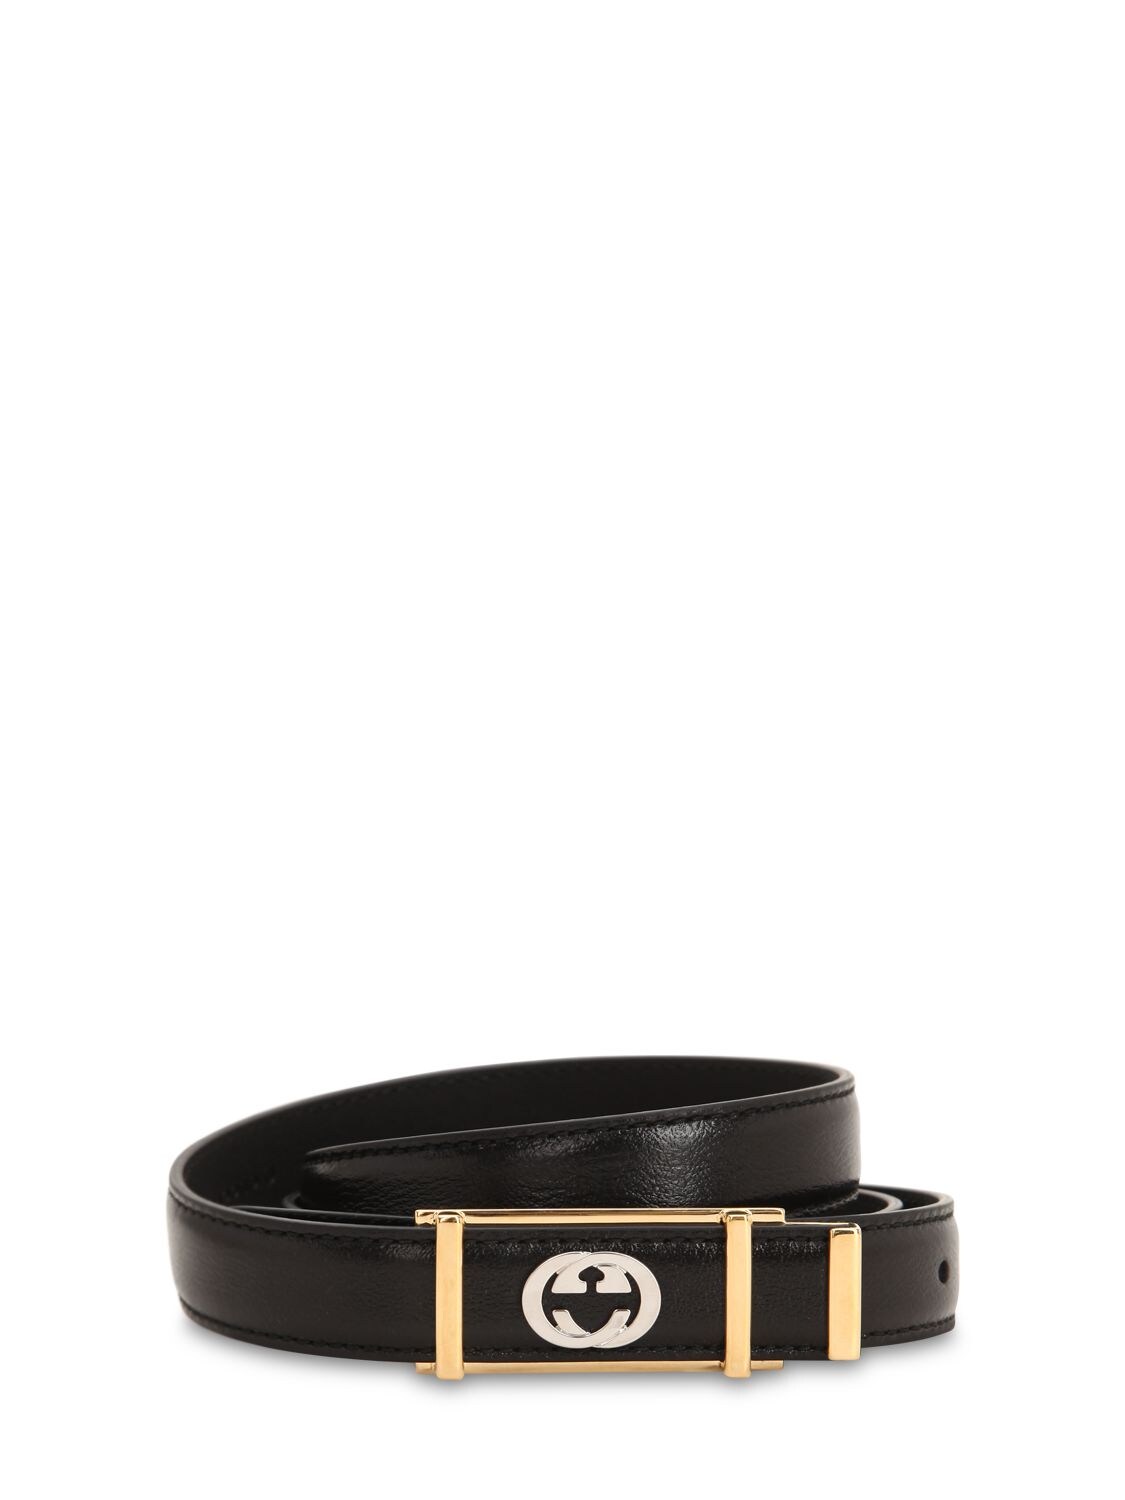 Gucci Men's Skinny Leather Belt W/ Framed Buckle In Black